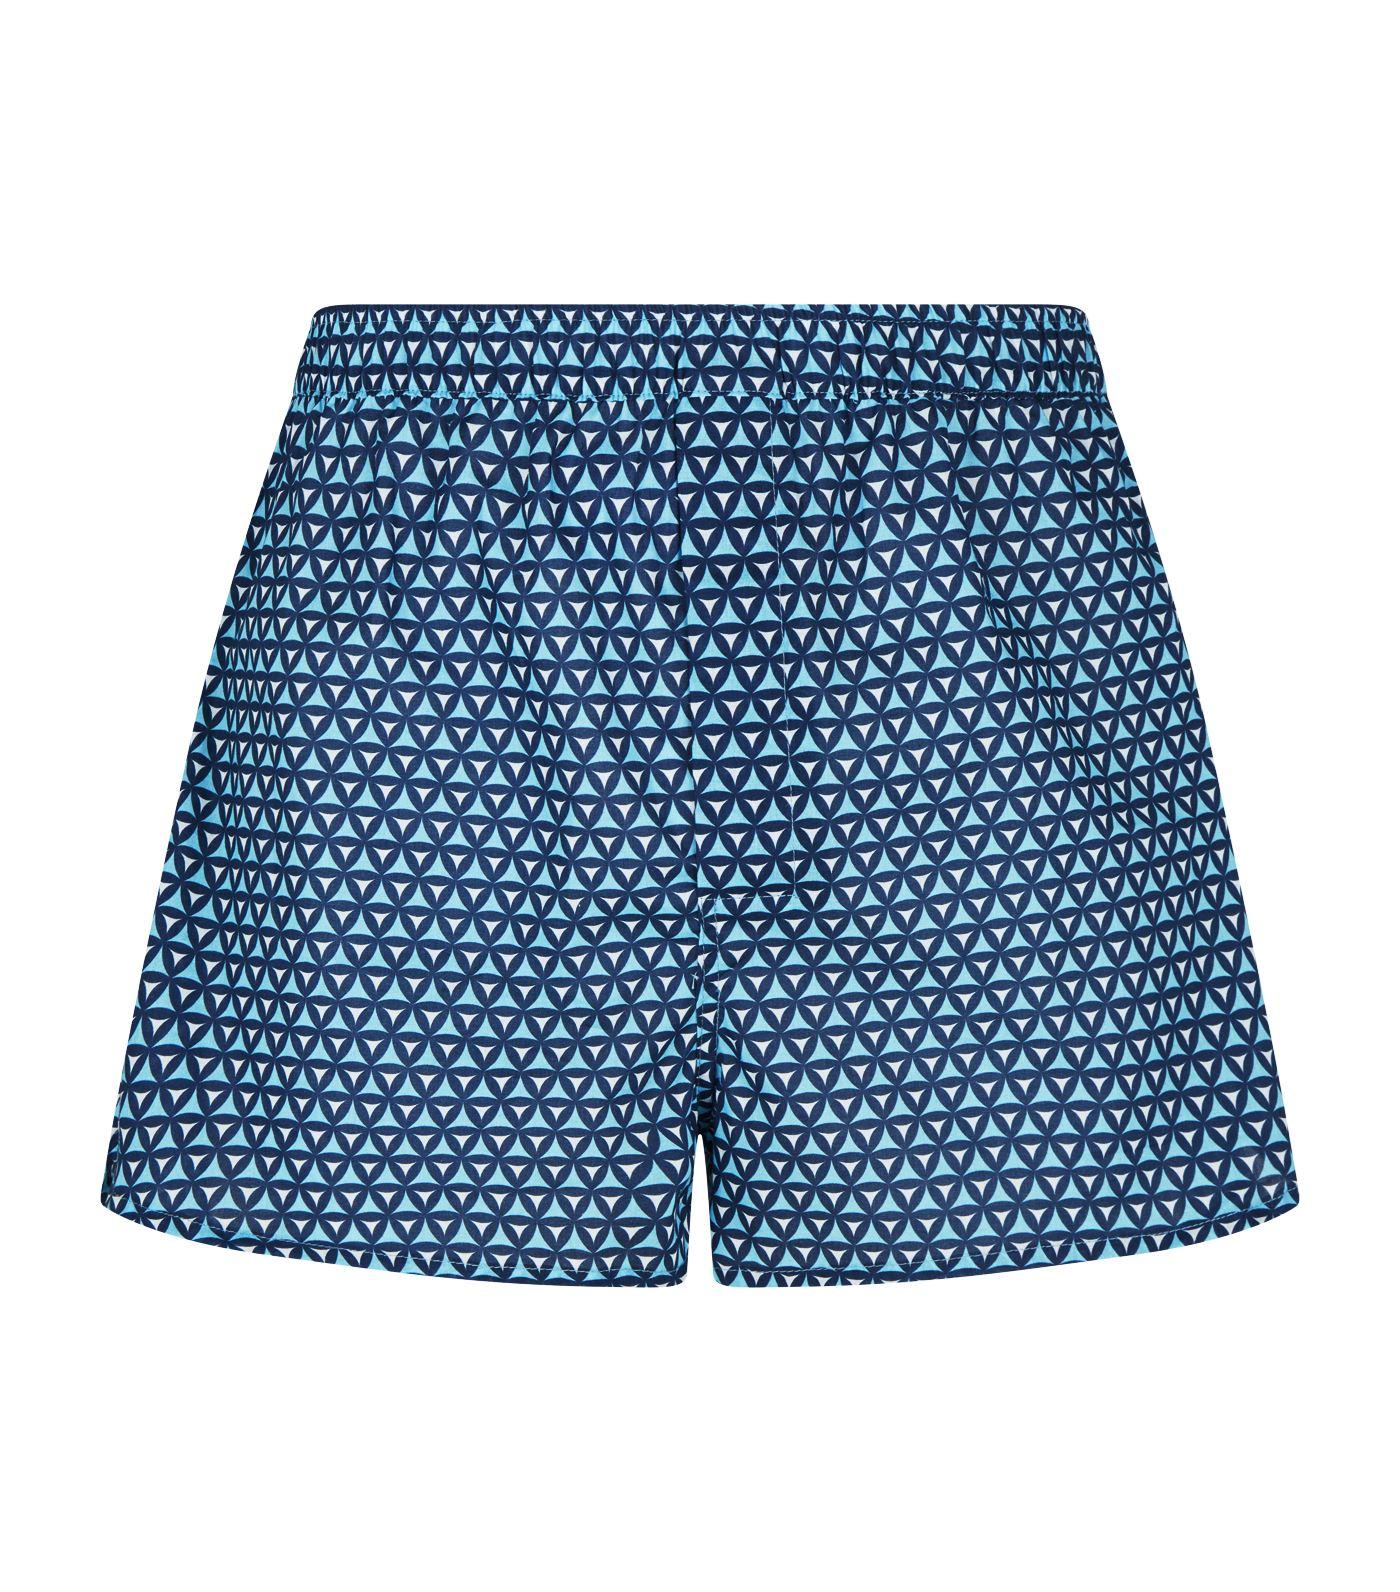 Derek Rose Triangle Print Cotton Boxer Shorts in Blue for Men - Lyst